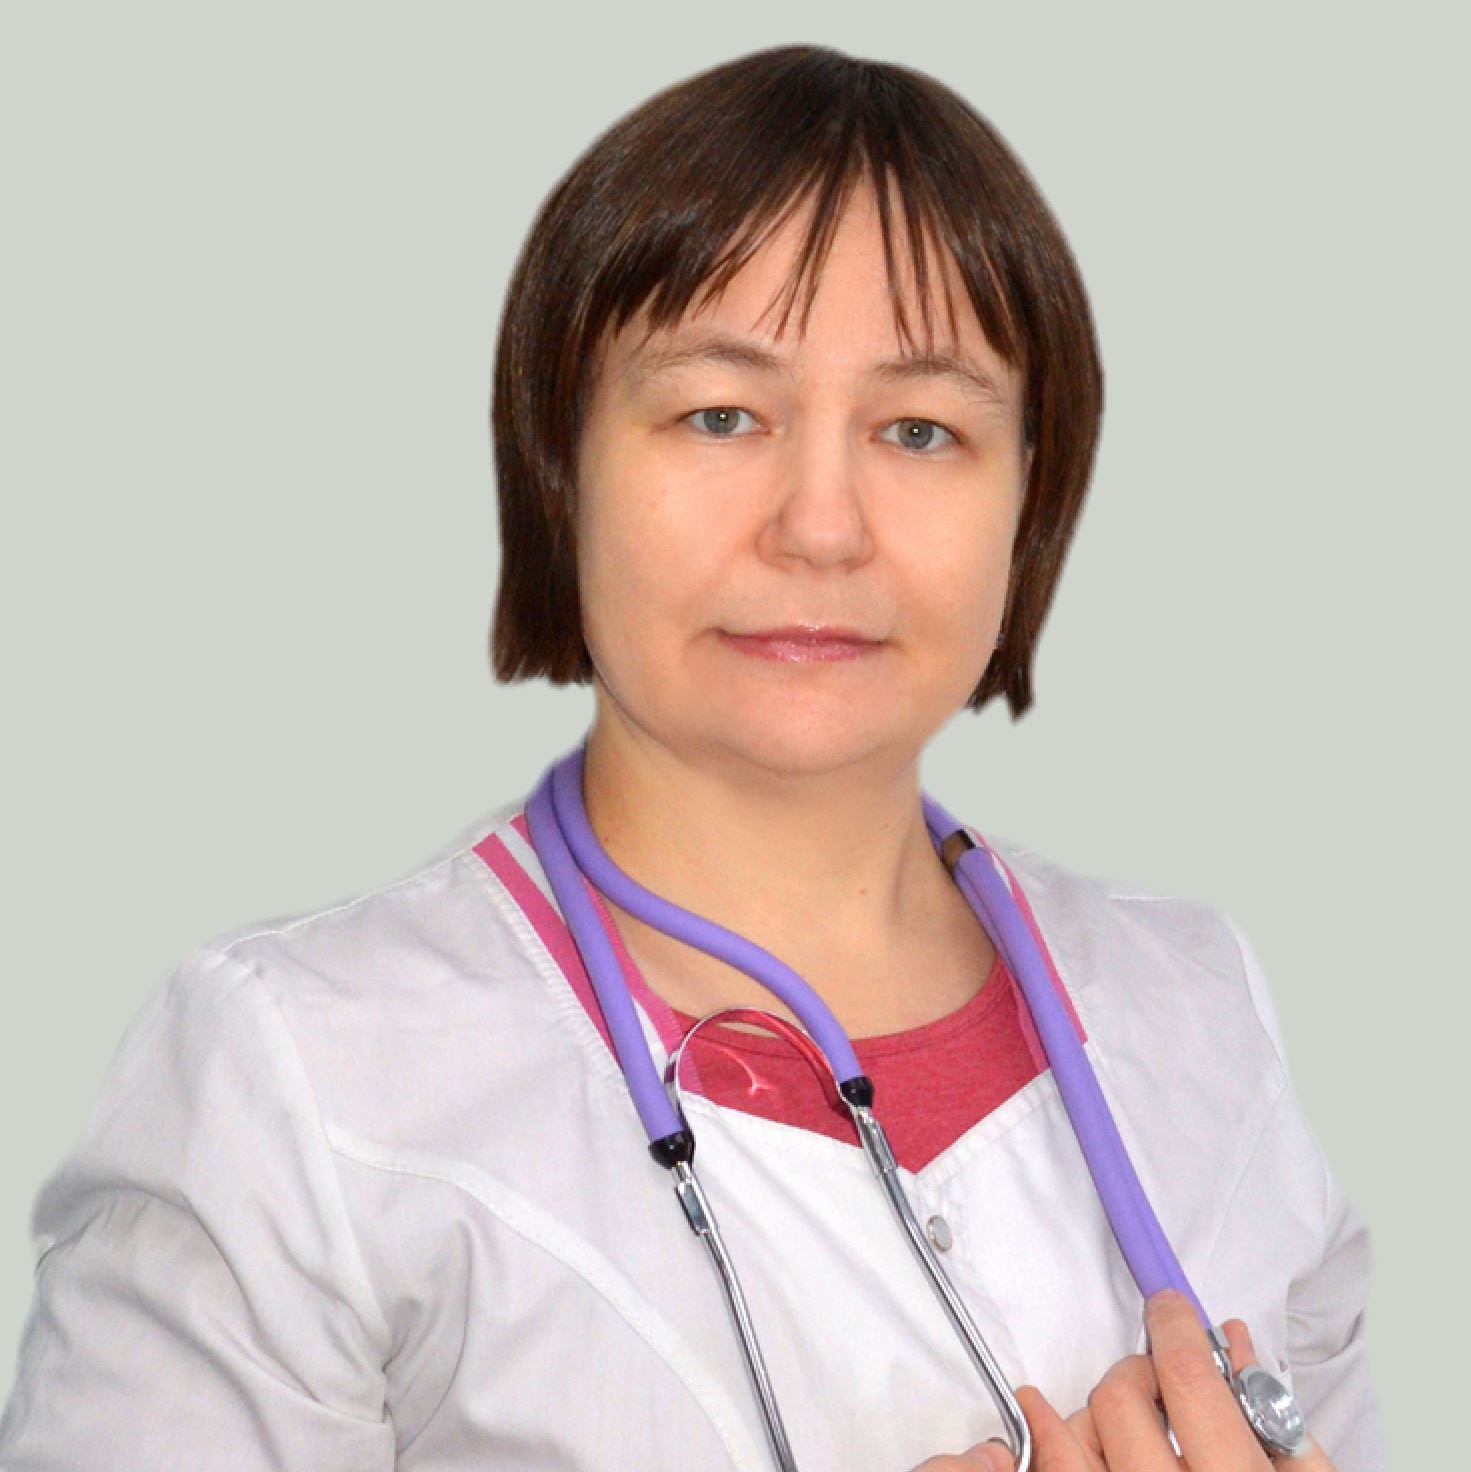 Галушкина Ольга Николаевна